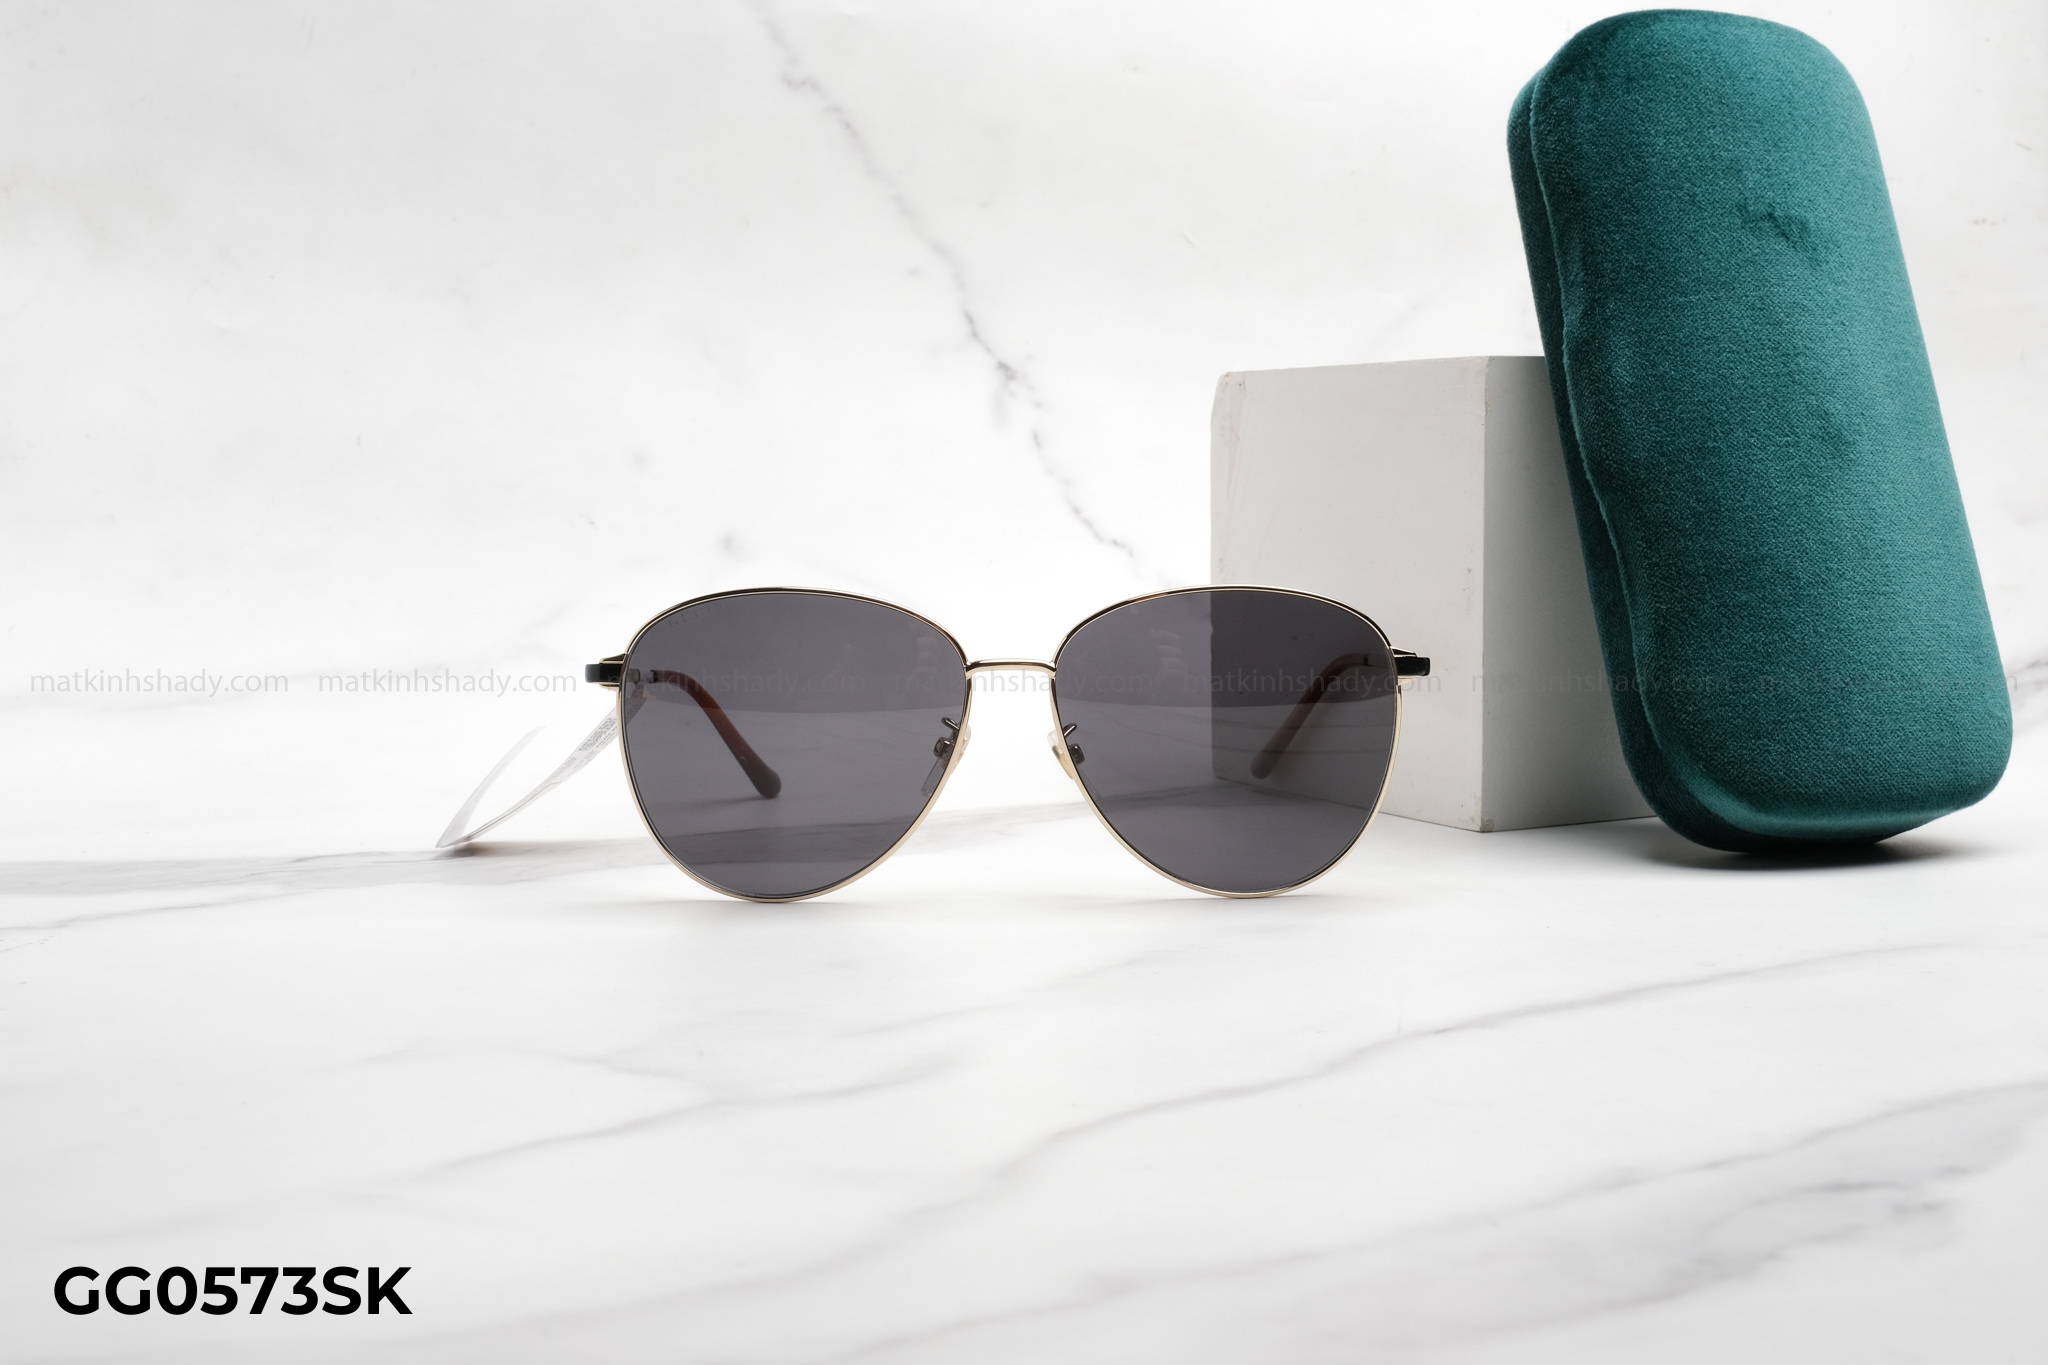  Gucci Eyewear - Sunglasses - GG0573SK 